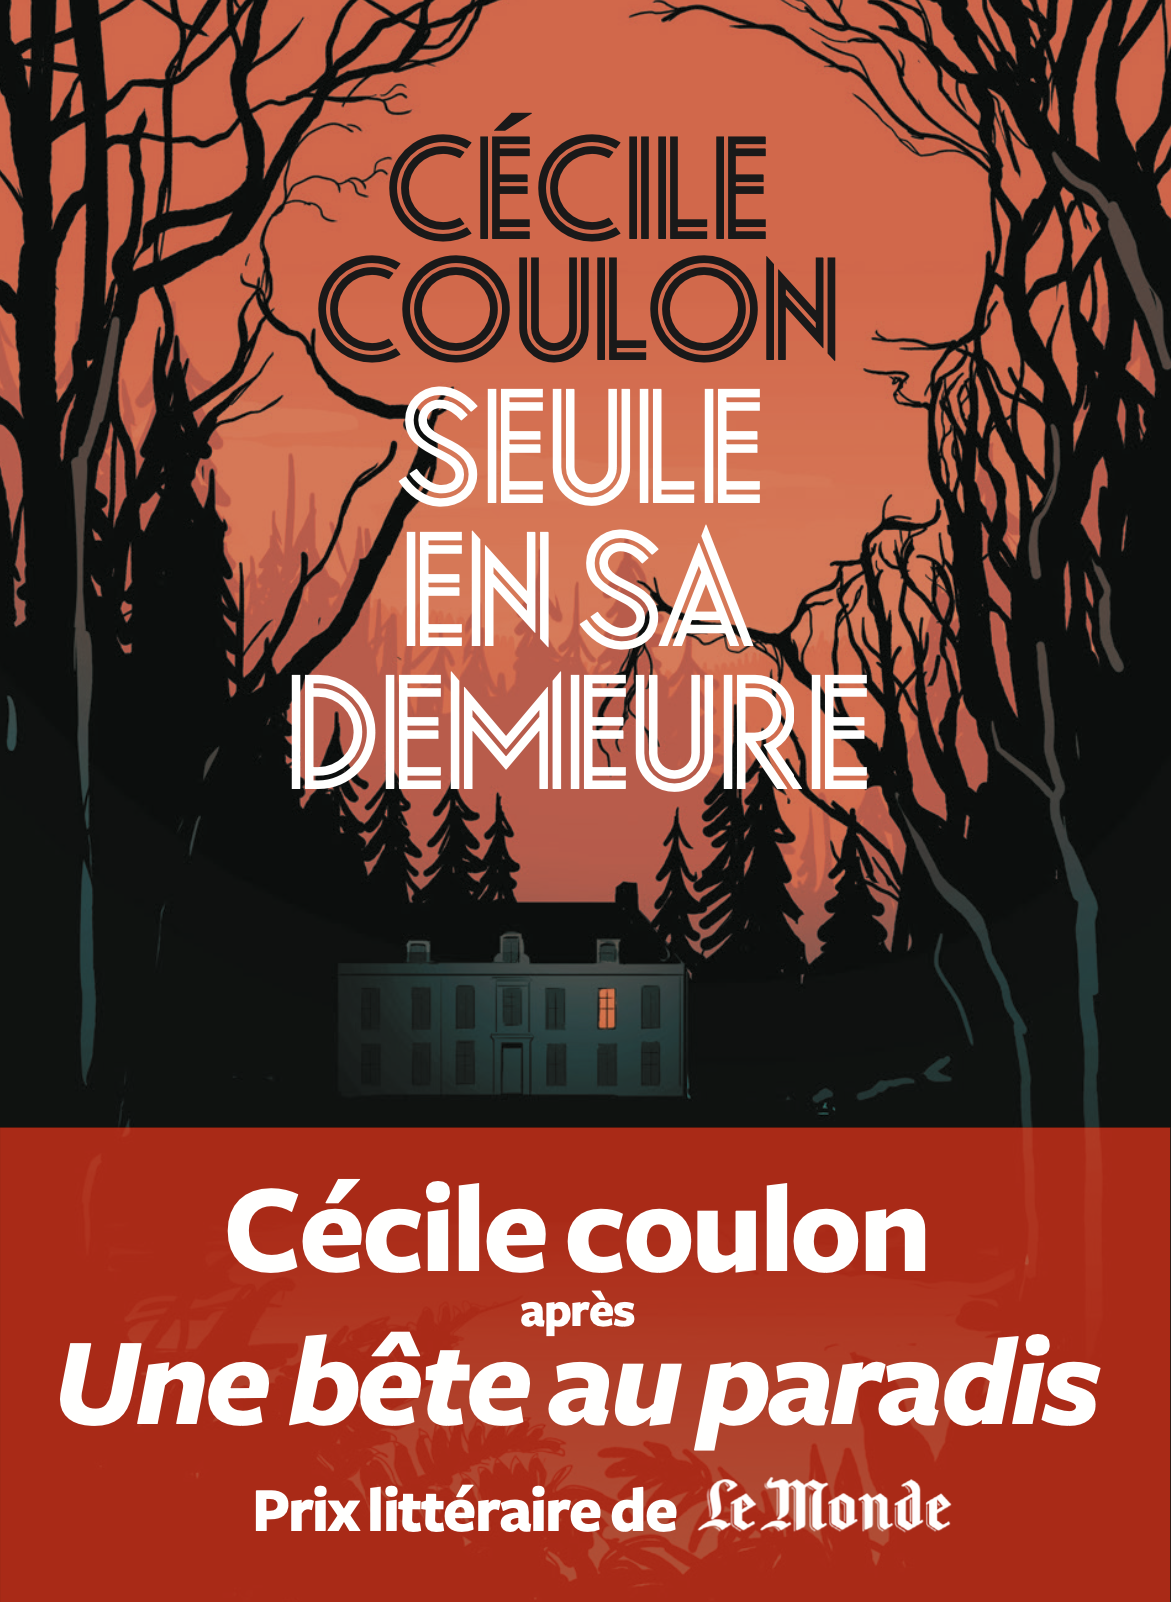 Coulon